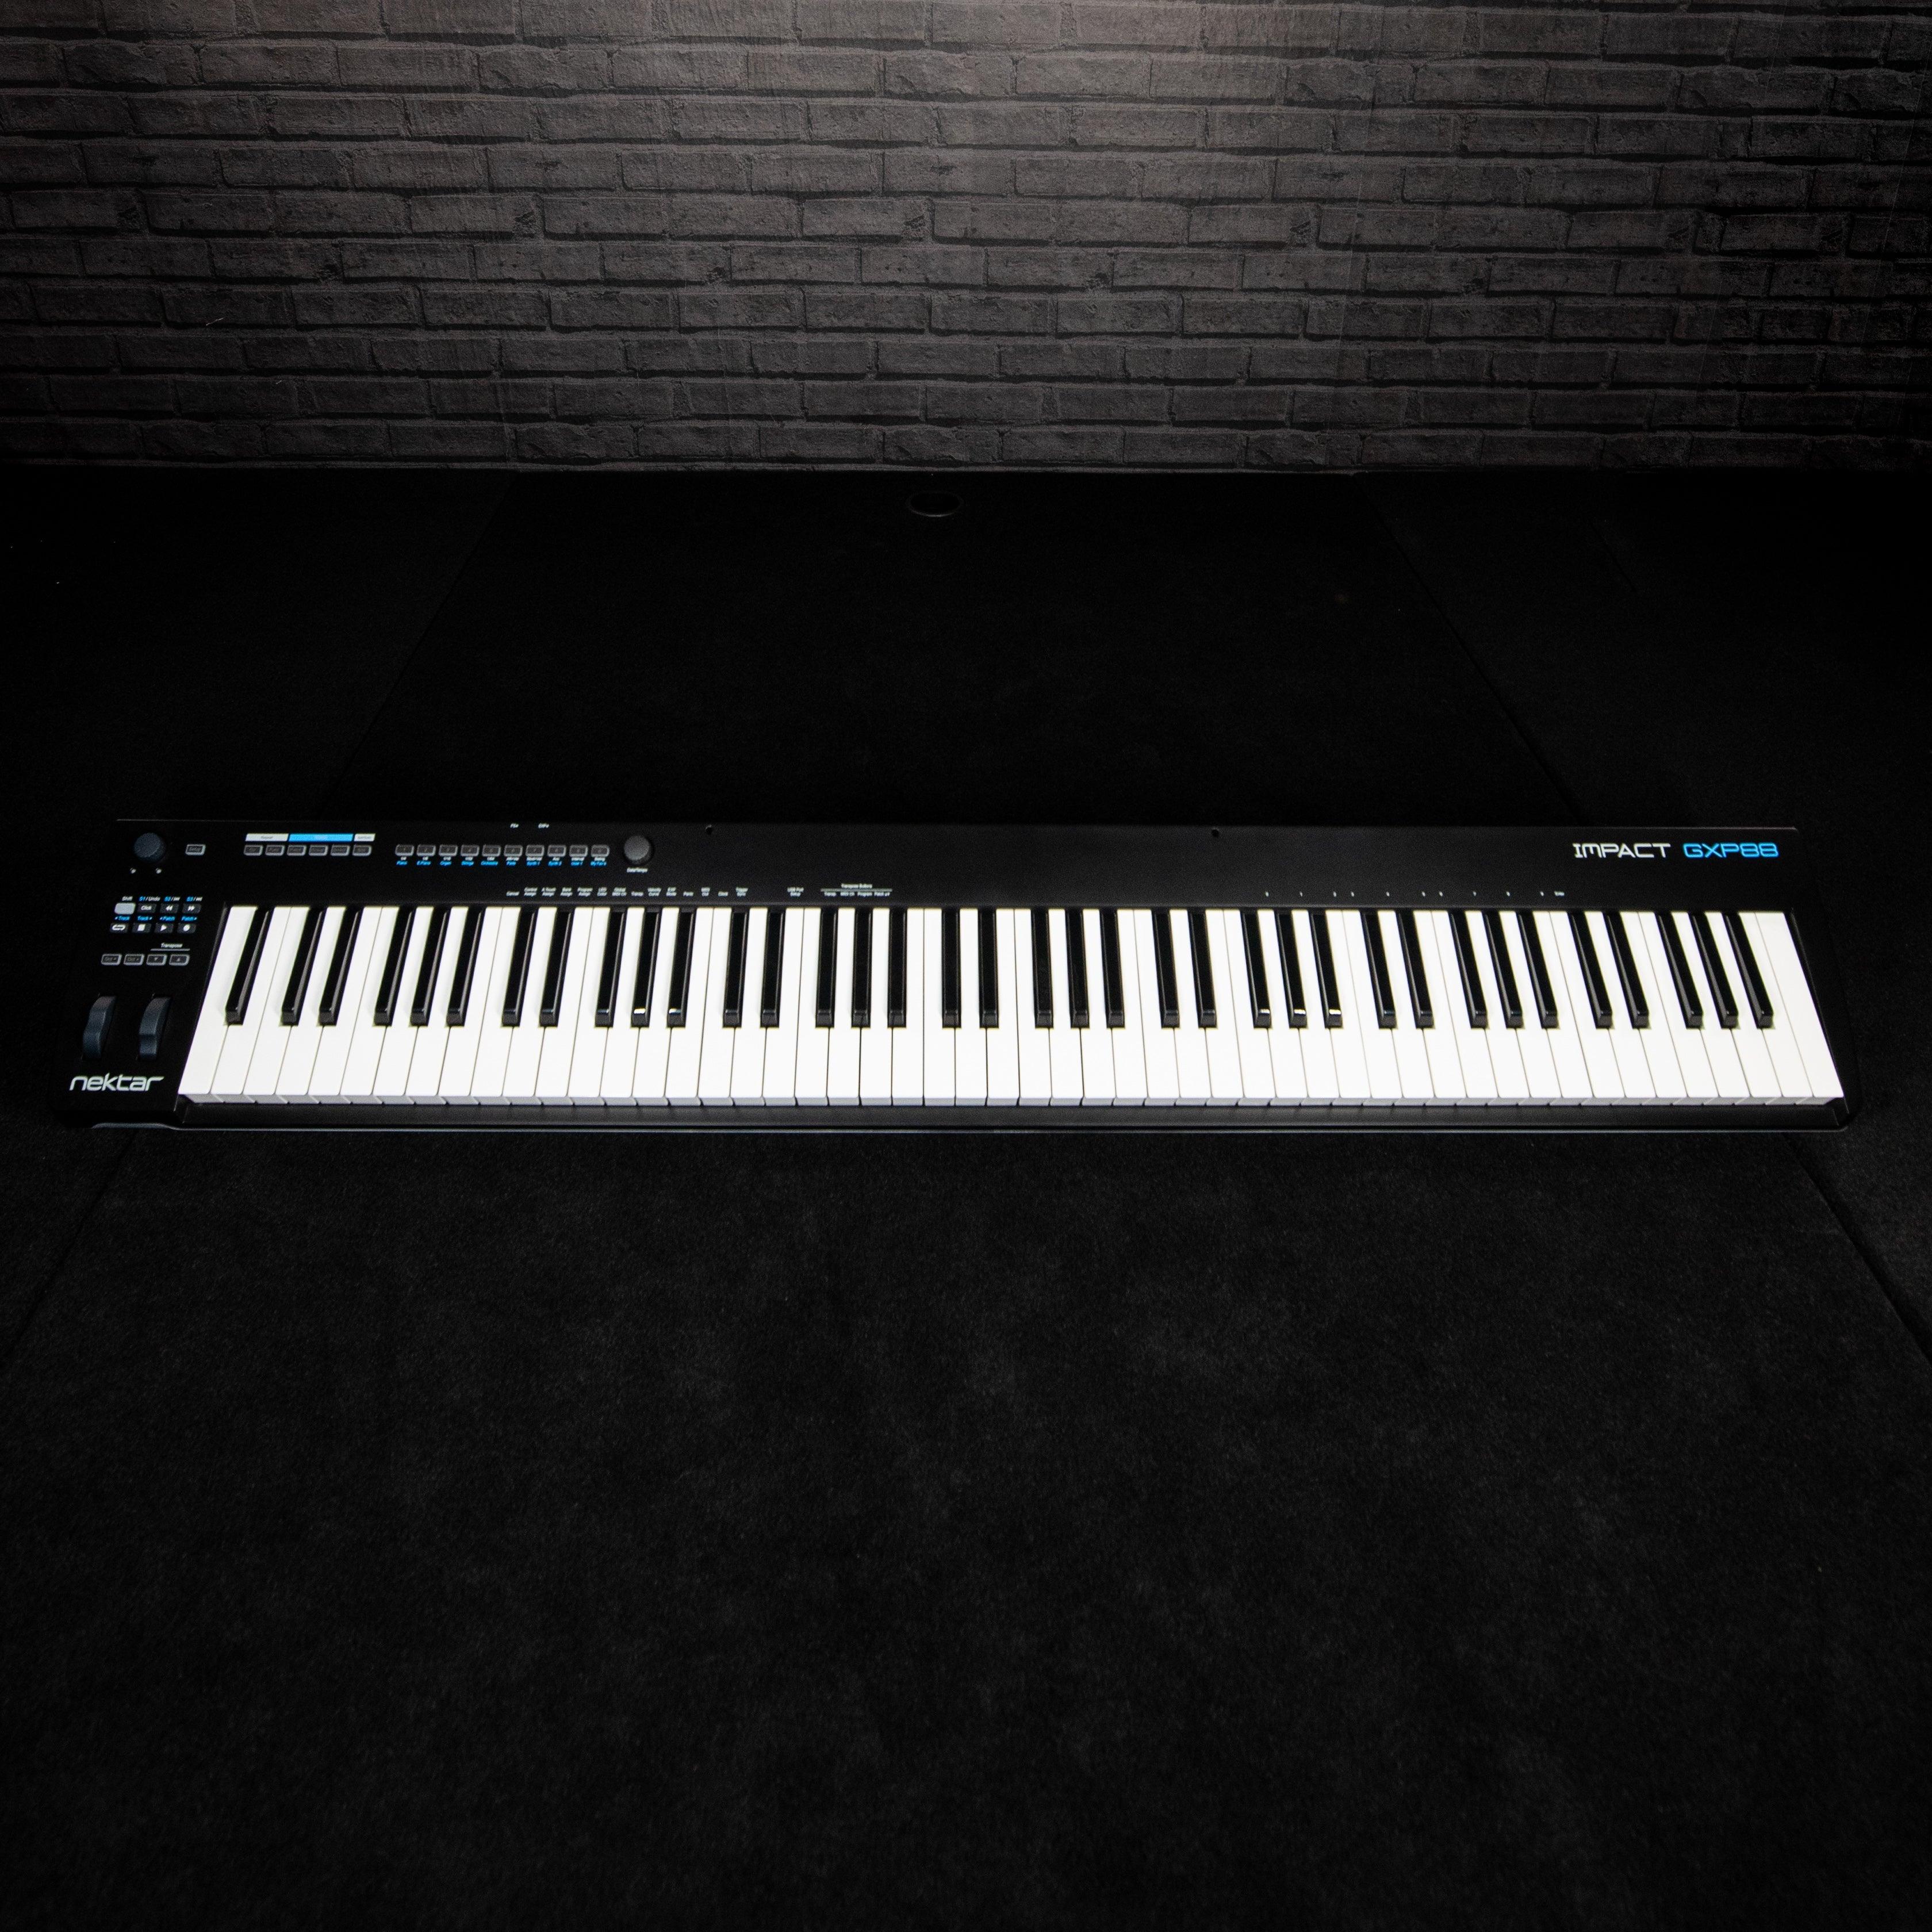 Nektar Impact GXP88 Midi Controller Keyboard - Impulse Music Co.